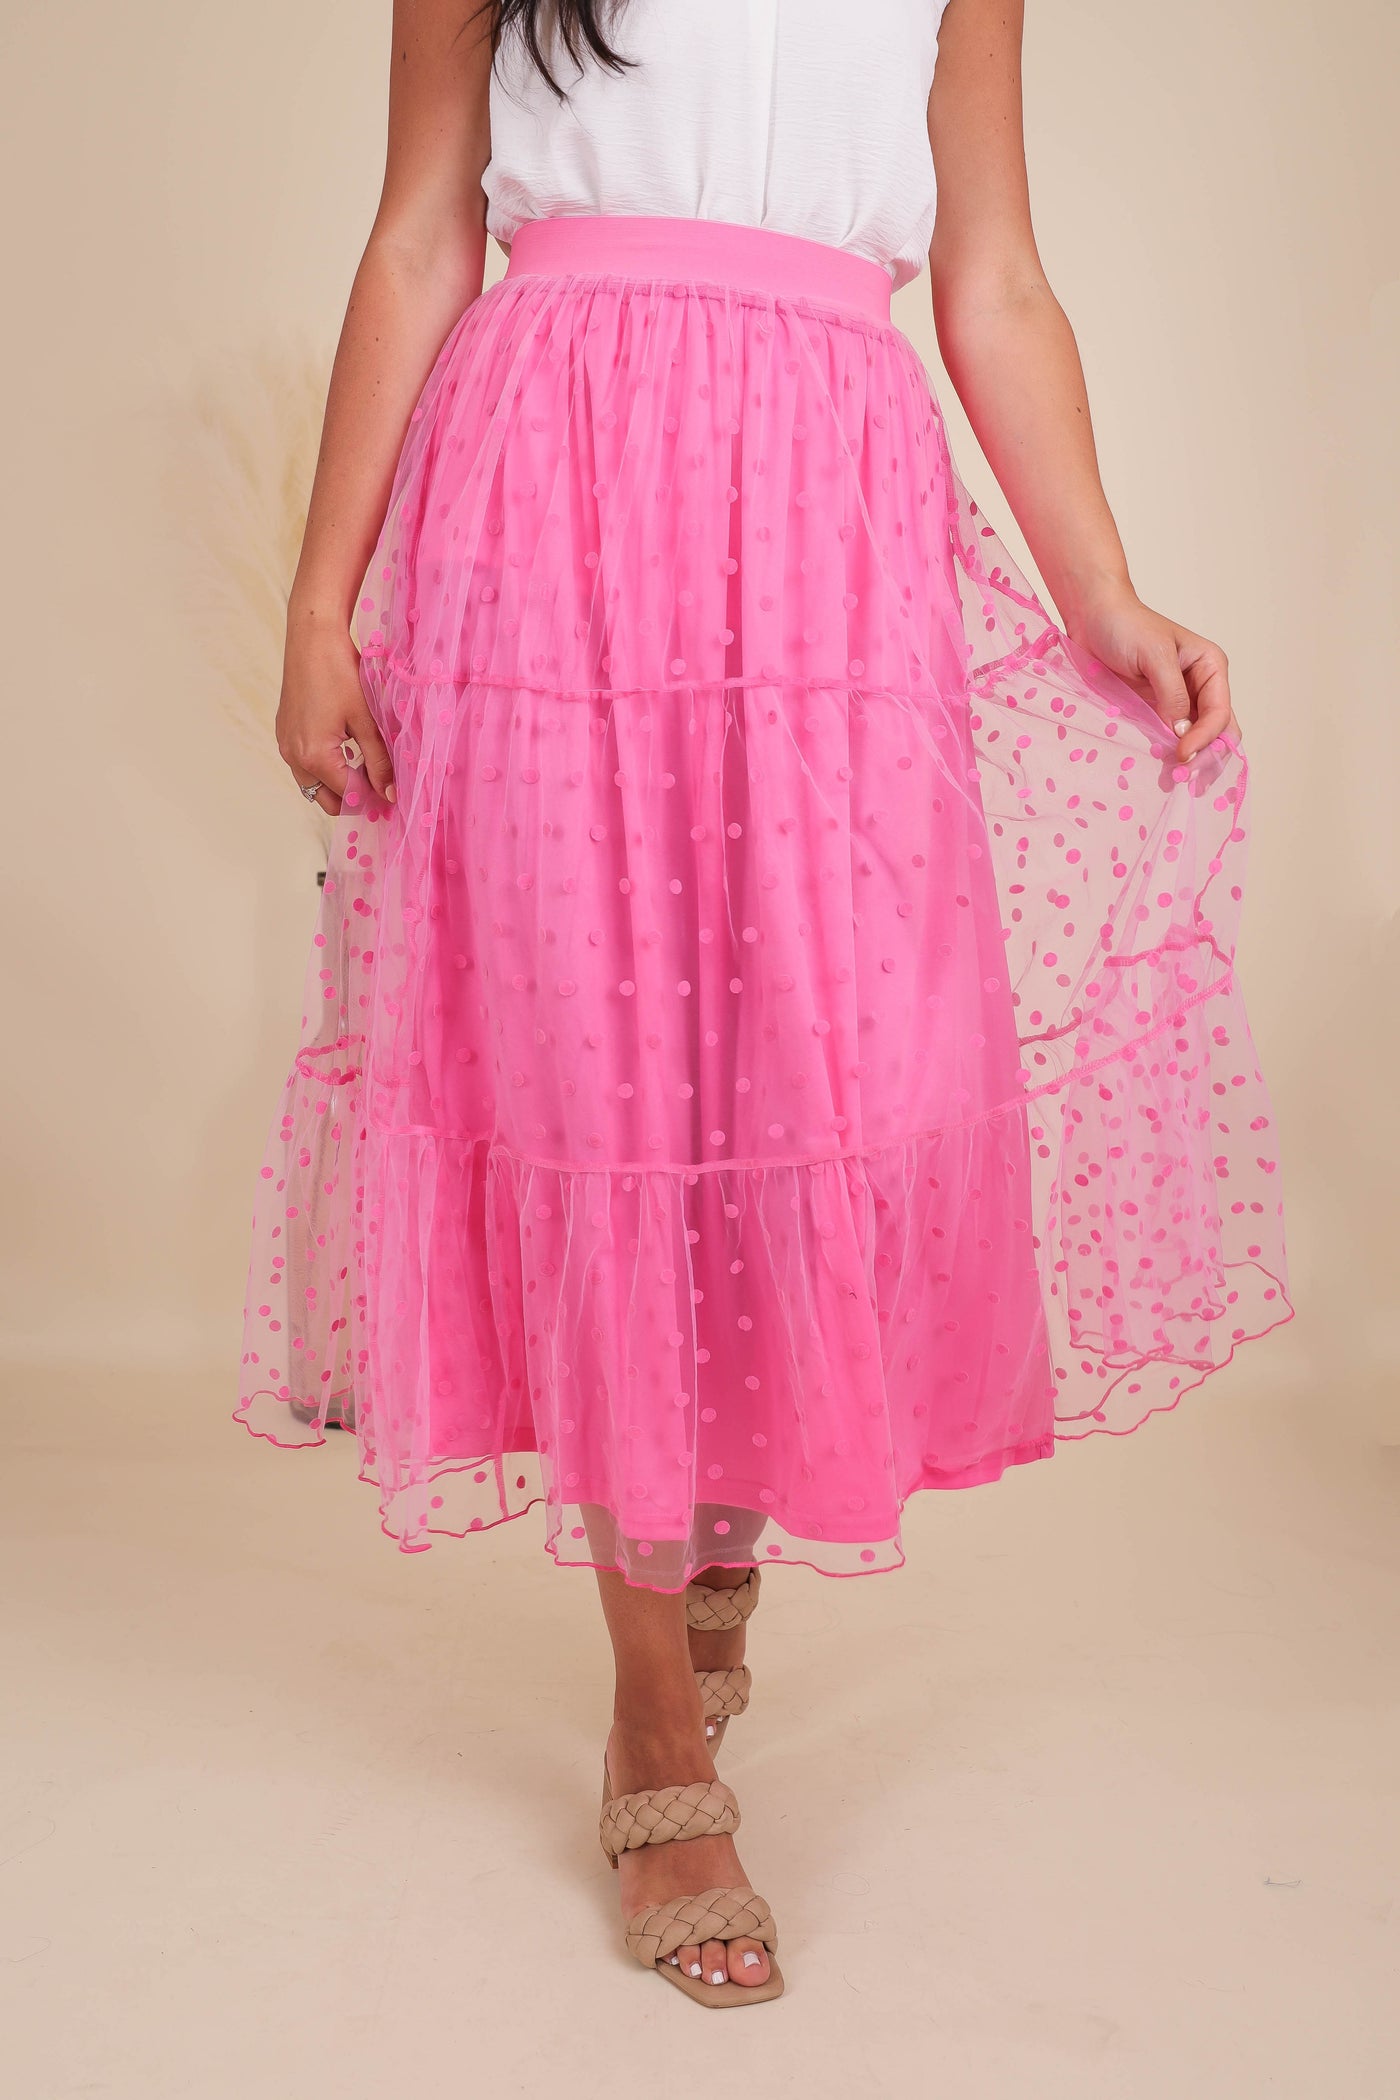 Tulle Polkadot Skirt- Women's Hot Pink Maxi Skirt- Women's Preppy Outfits